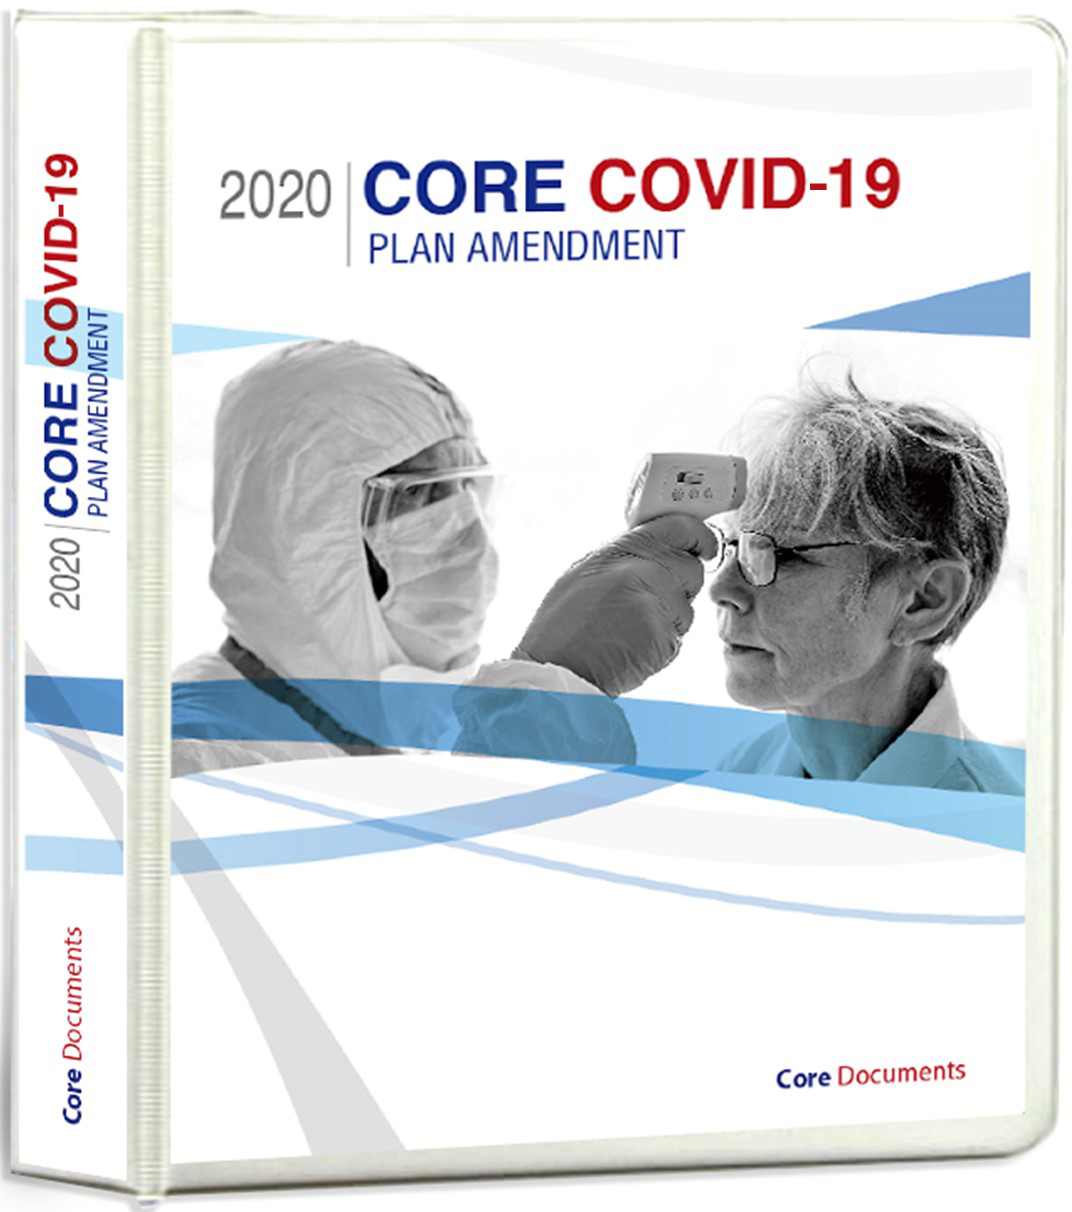 The new Core COVID-19 plan document amendment